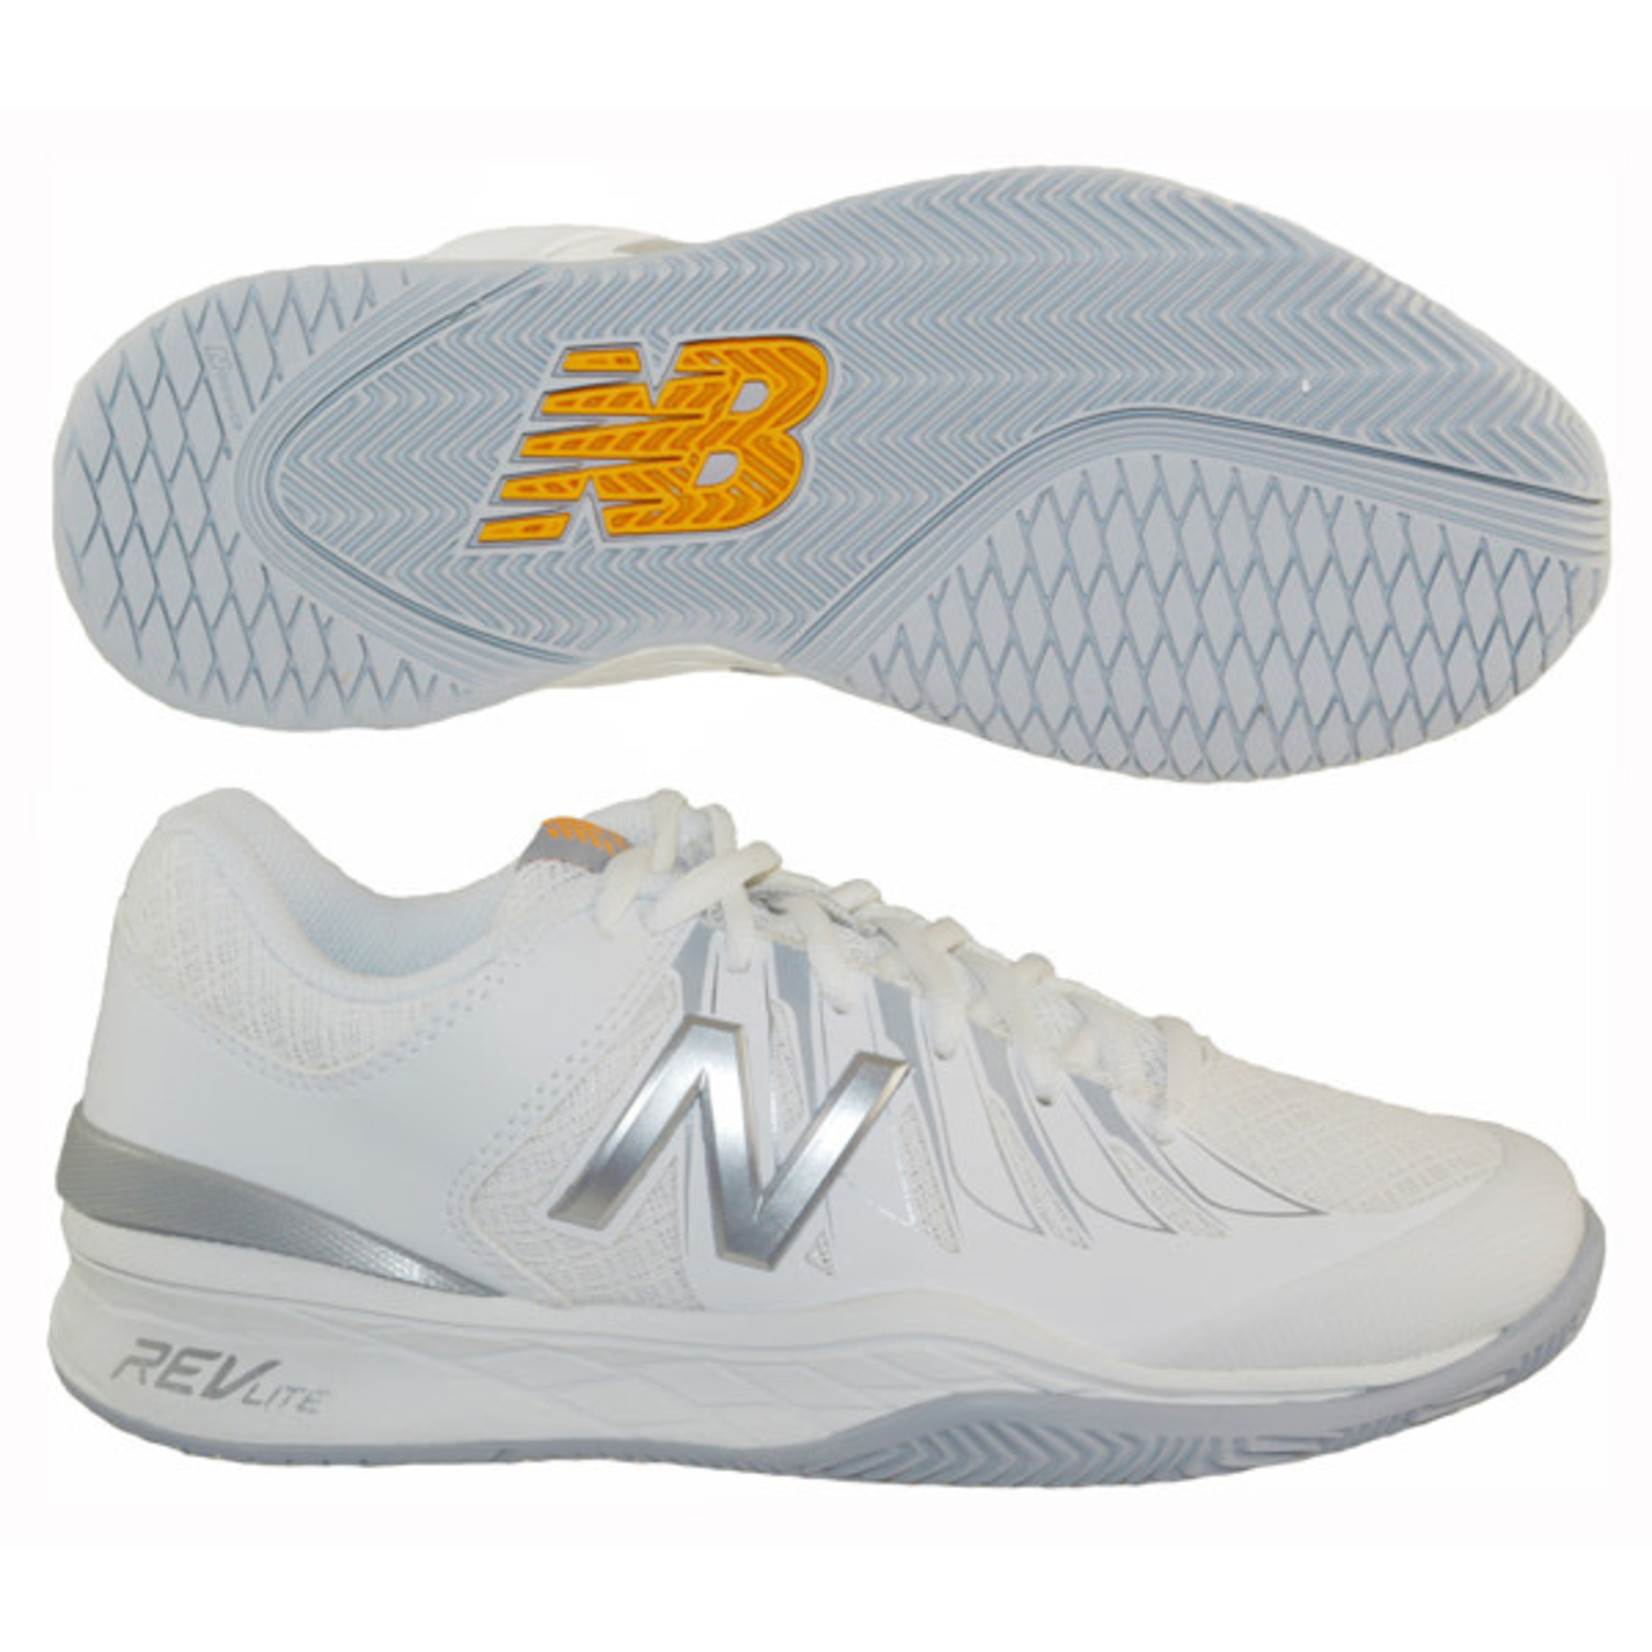 New Balance New Balance 1006 White/Silver Women's Tennis Shoes